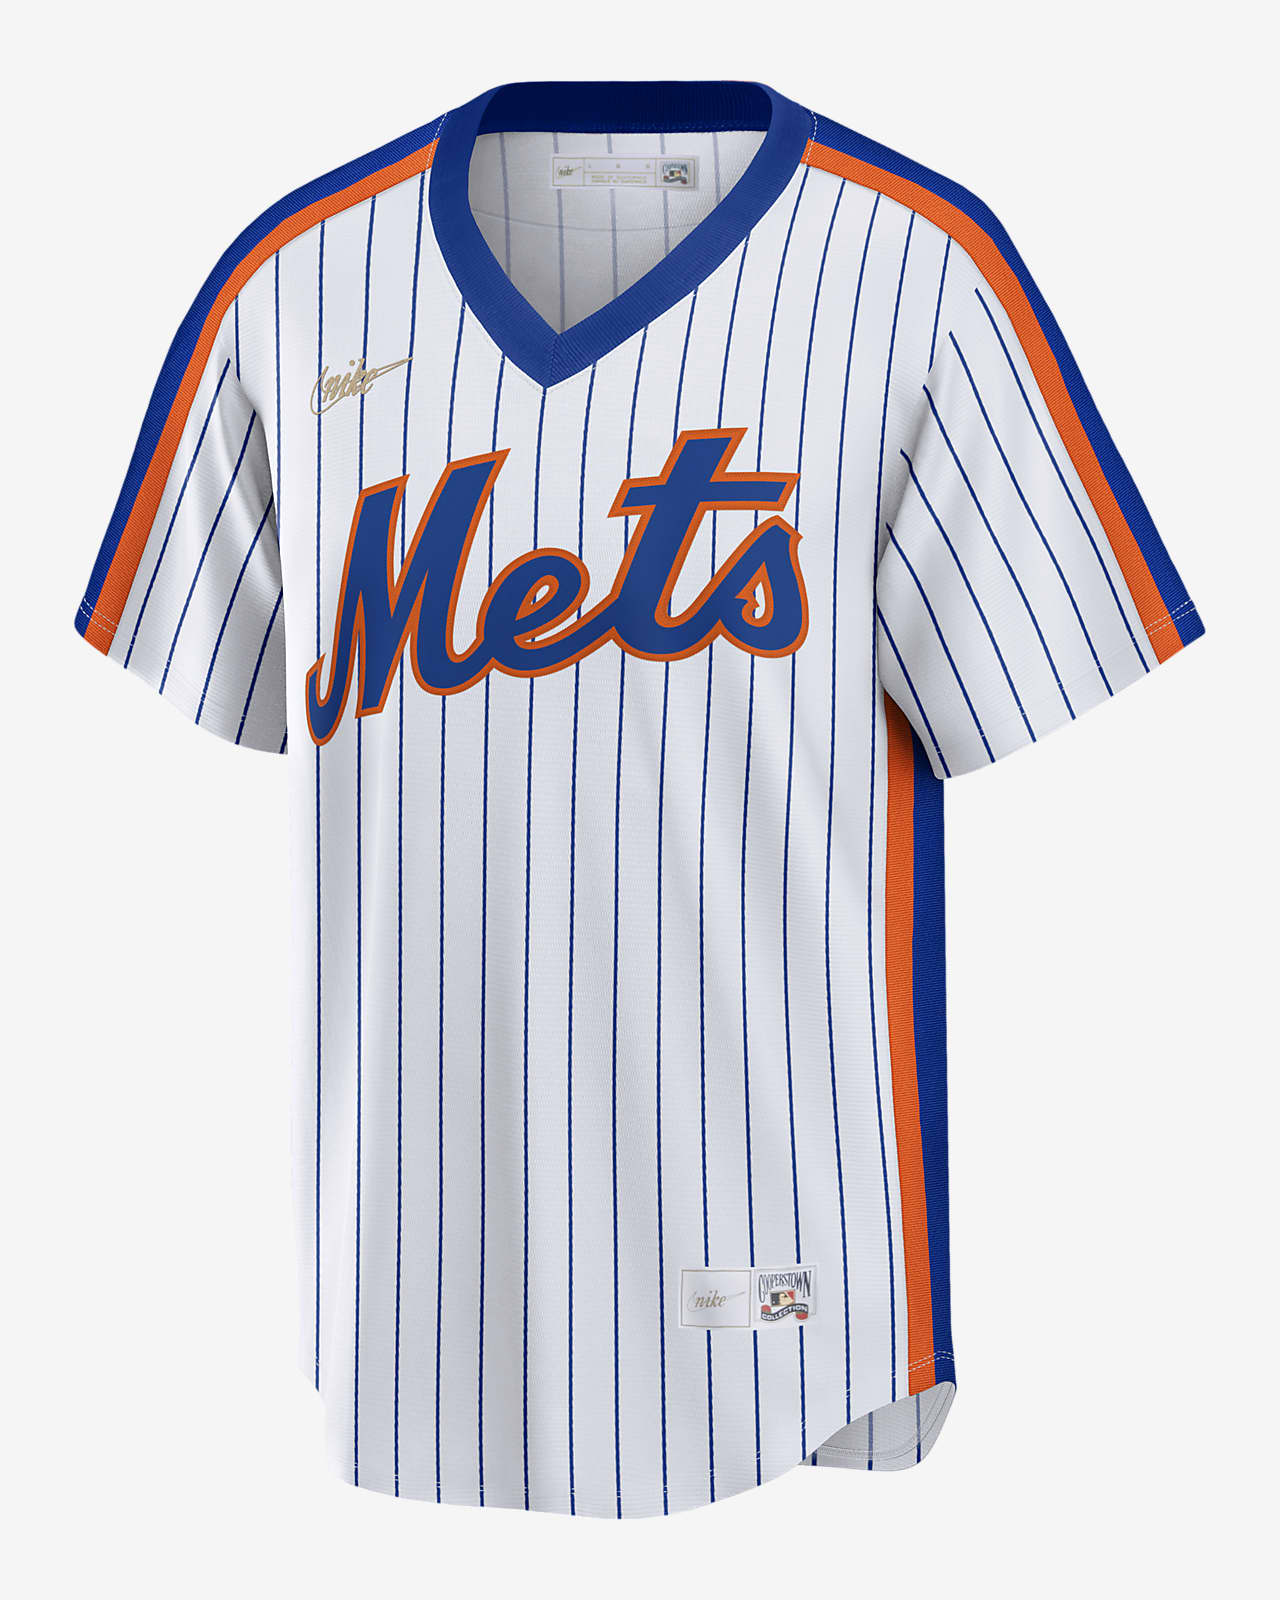 New York Mets Apparel, New York Mets Jerseys, New York Mets Gear